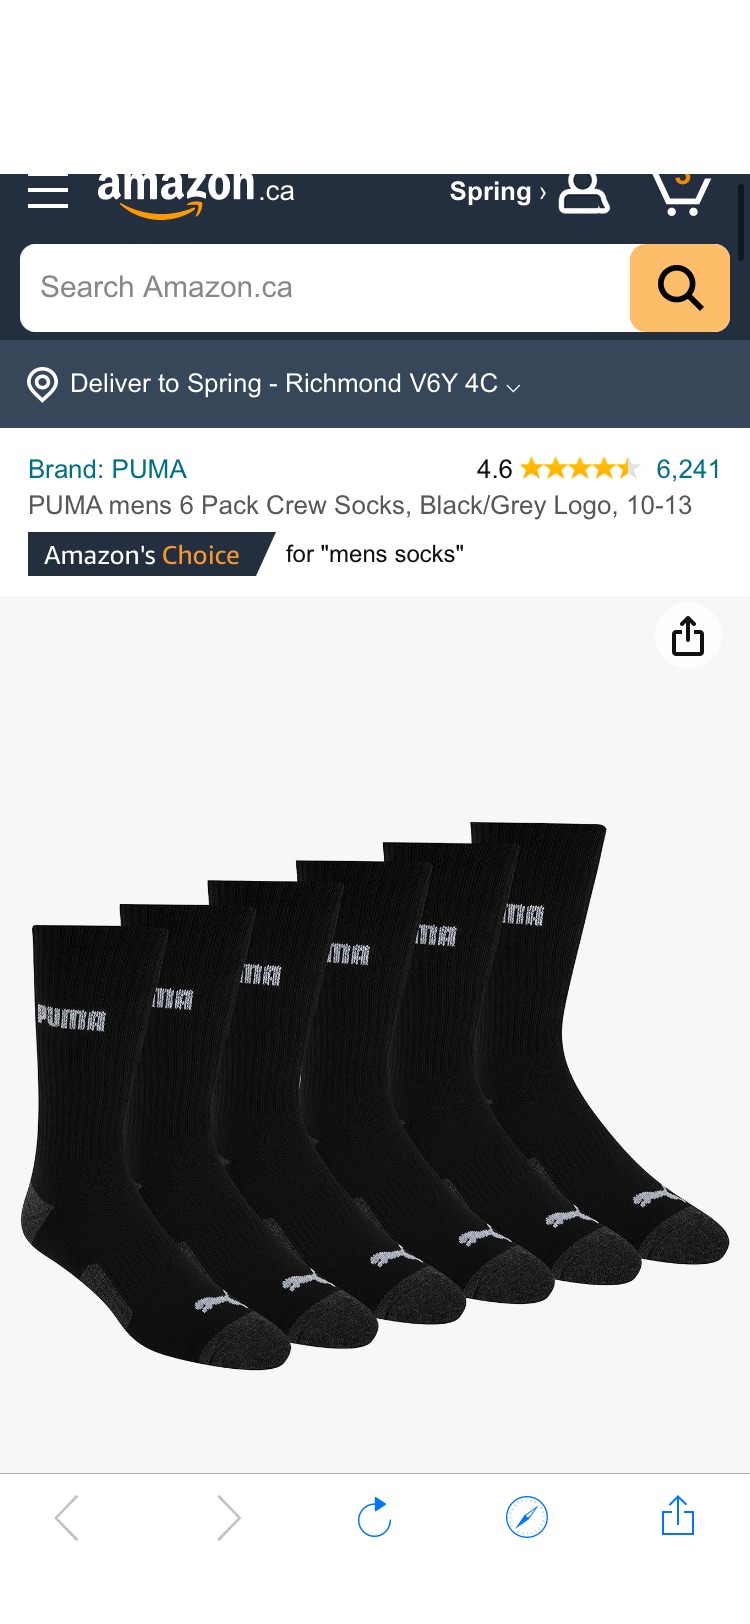 PUMA mens 6 Pack Crew Socks, Black/Grey Logo, 10-13 : Amazon.ca: Clothing, Shoes & Accessories